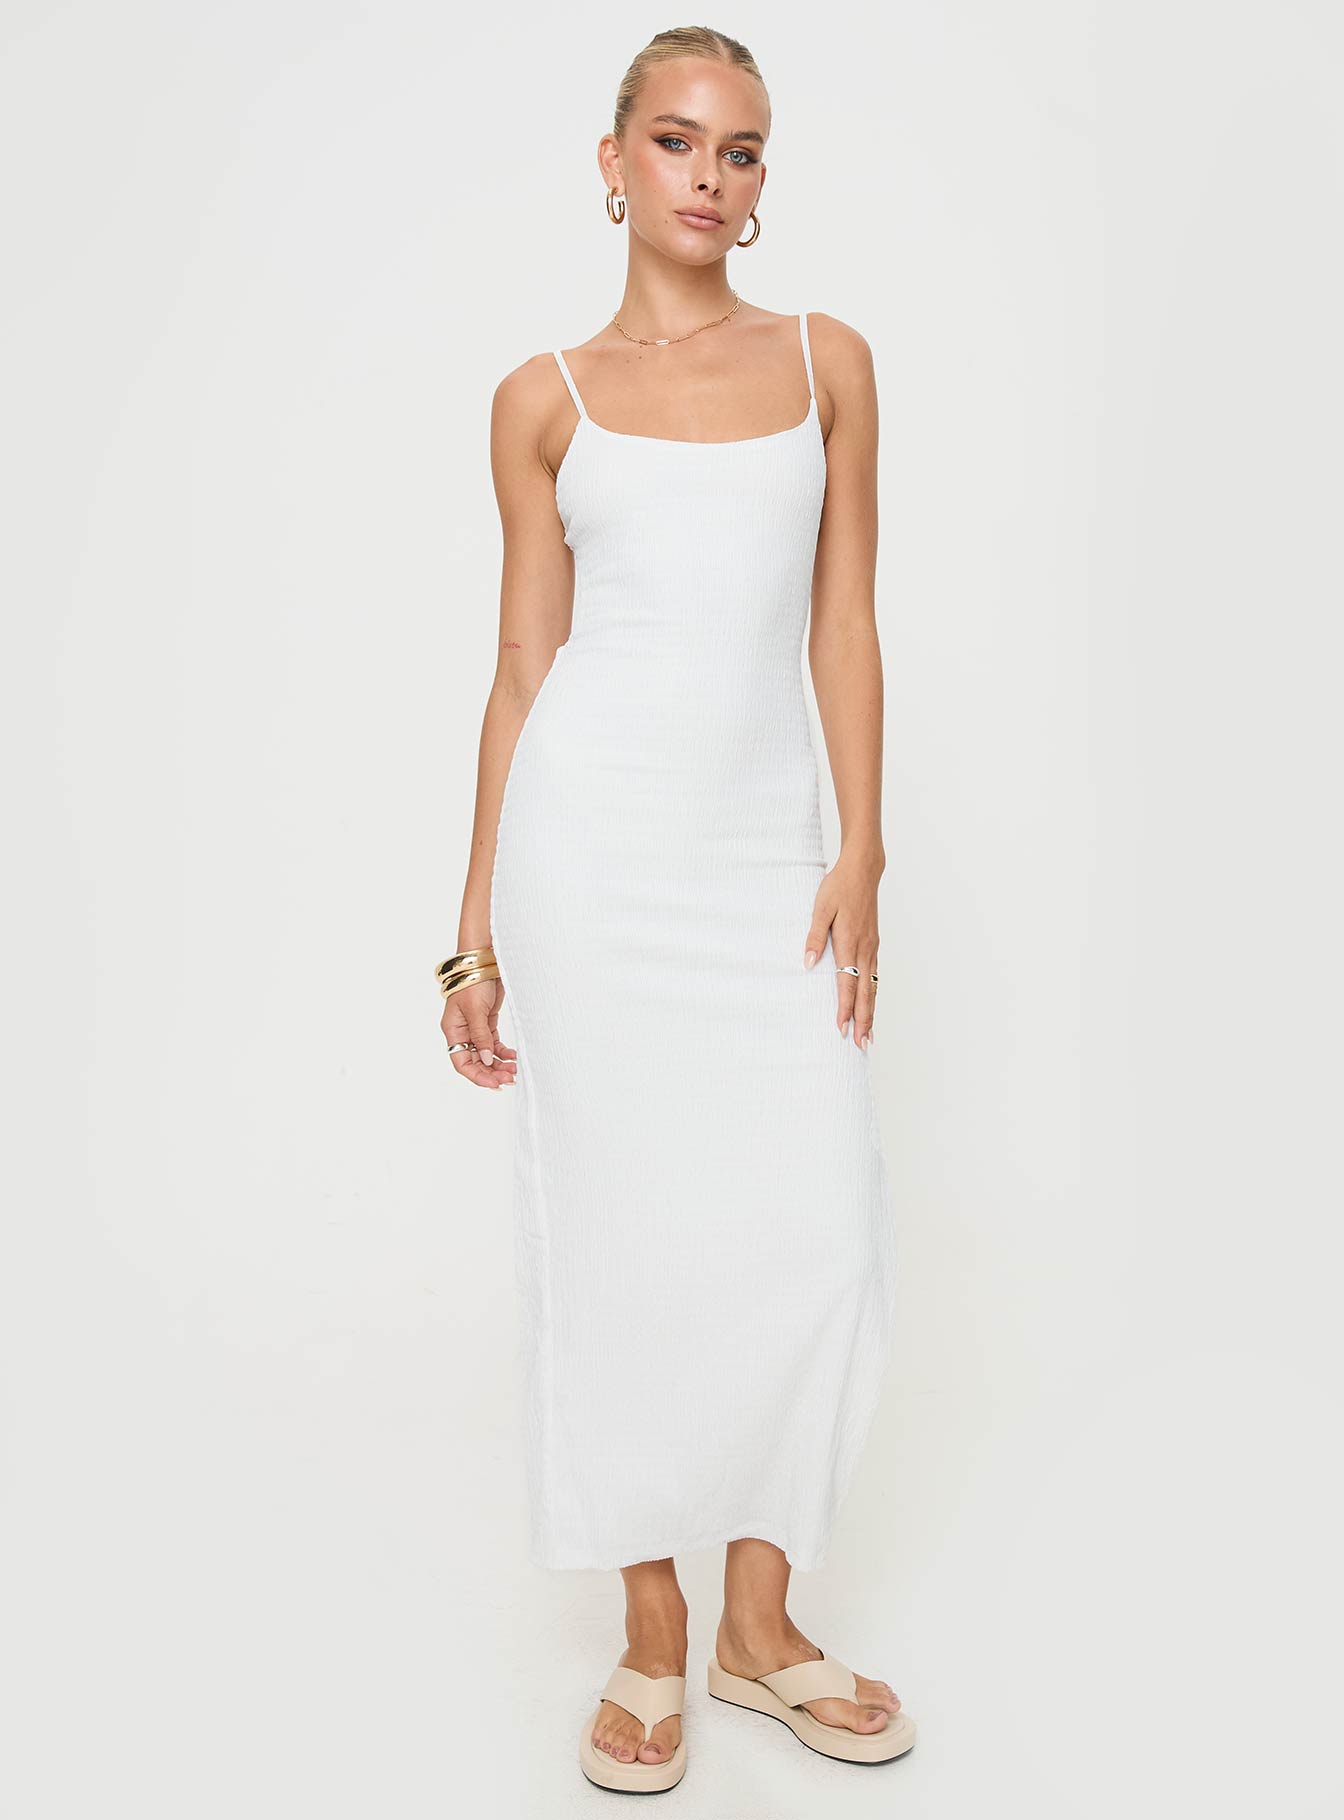 Shop Formal Dress - Elestria Maxi Dress White sixth image